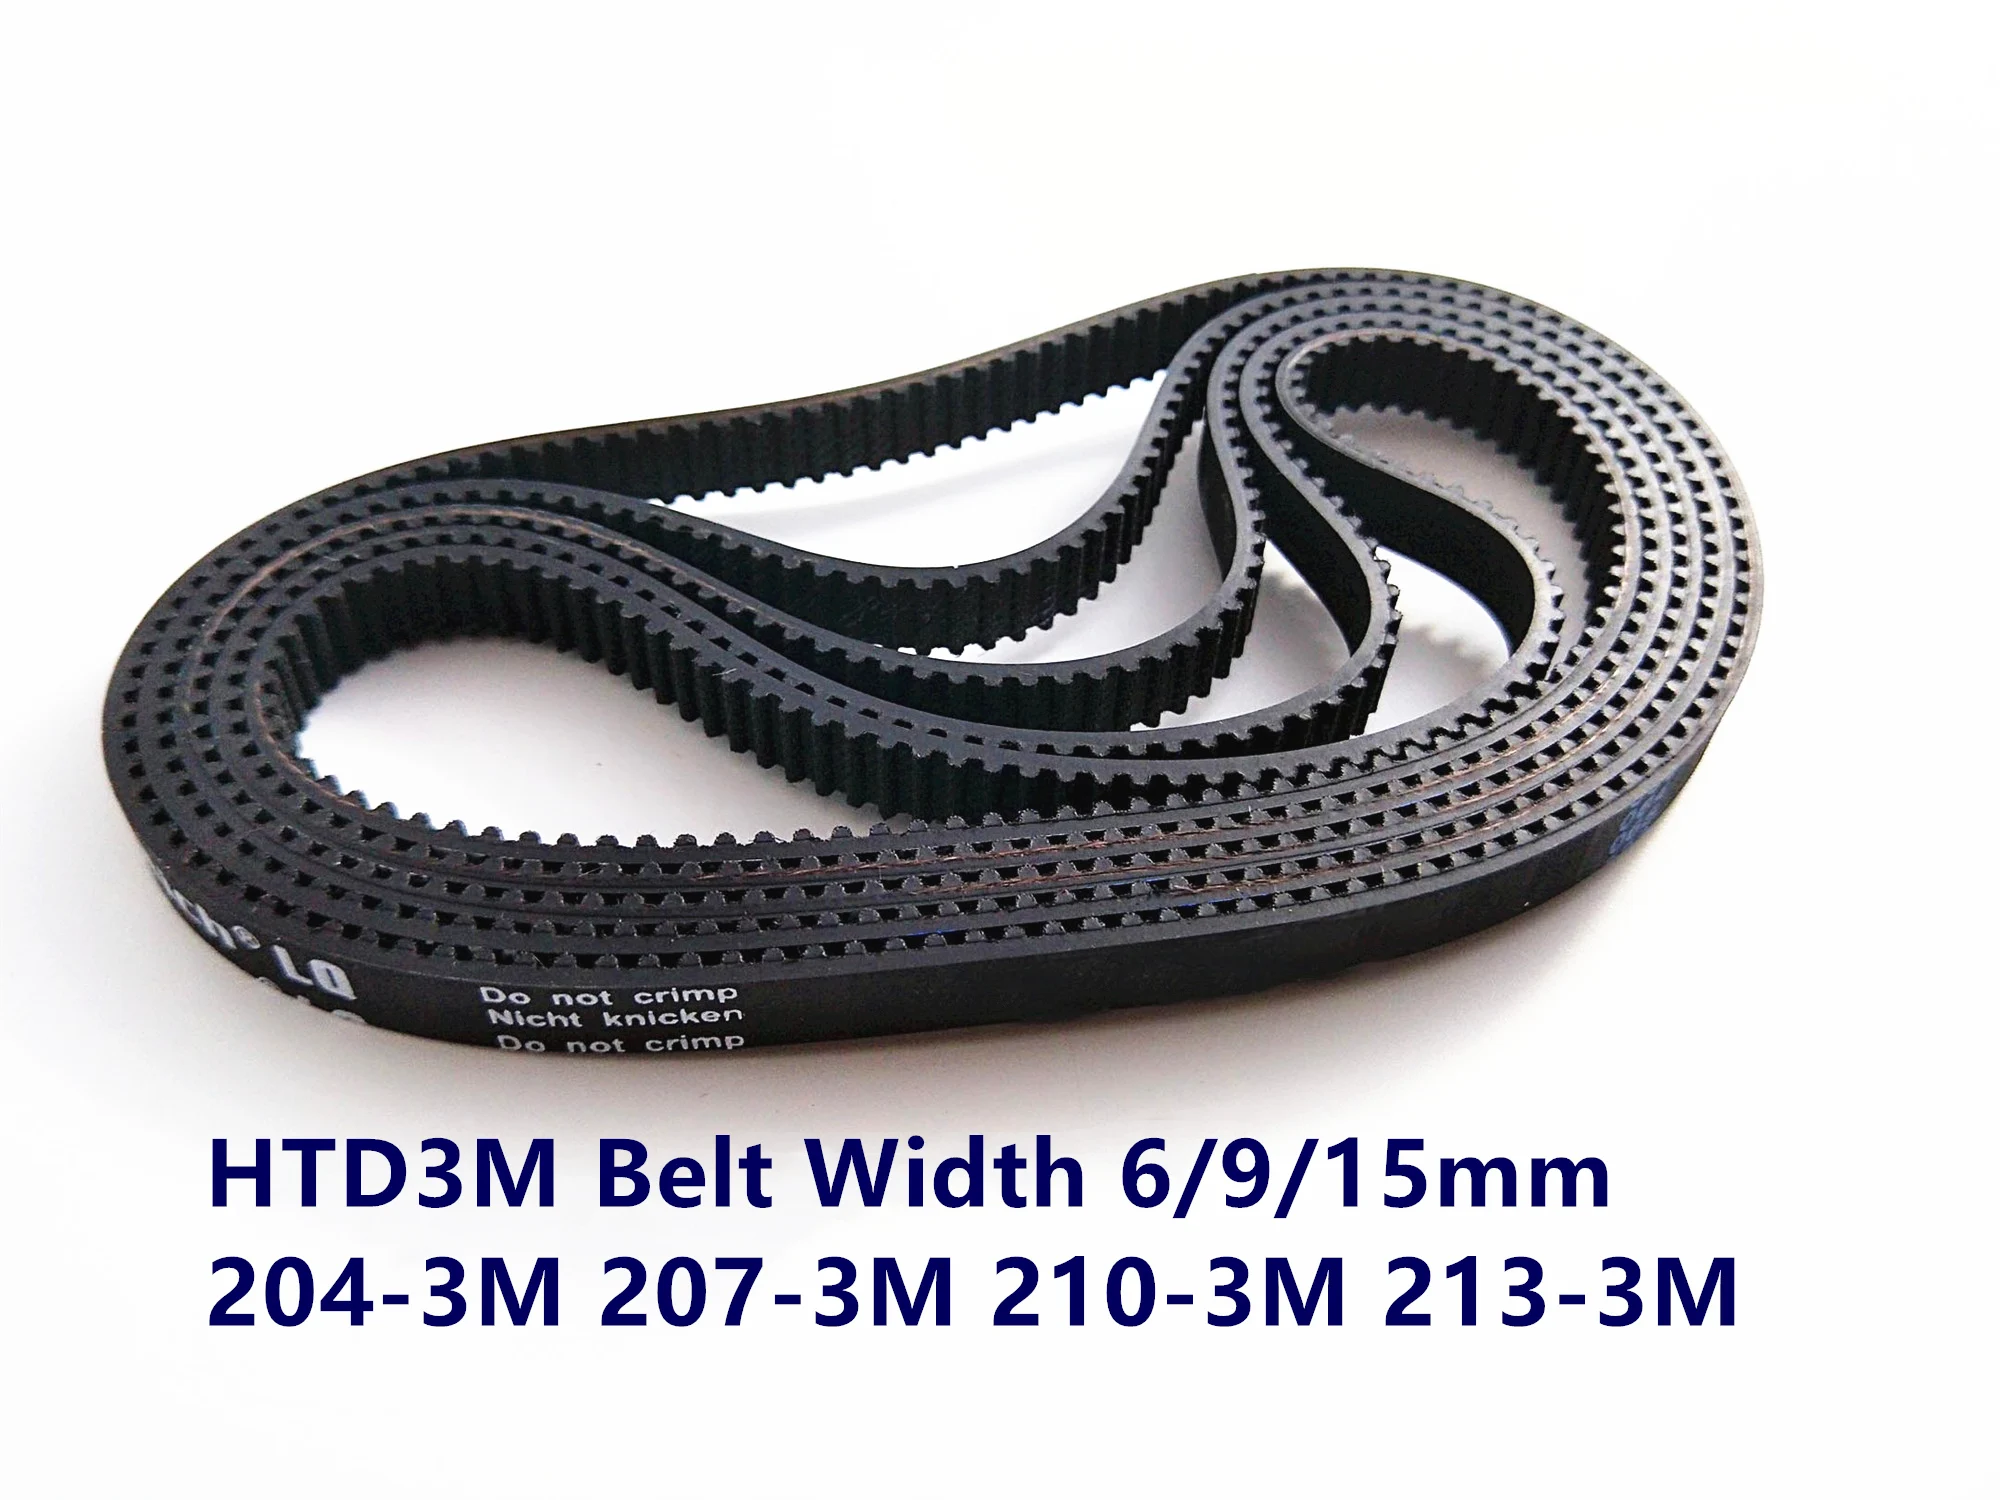 Arc HTD 3M Timing belt C=204 207 210 213 width6/8/9/10/12/15/16mm Teeth68 69 70 71 HTD3M synchronous 204-3M 207-3M 210-3M 213-3M